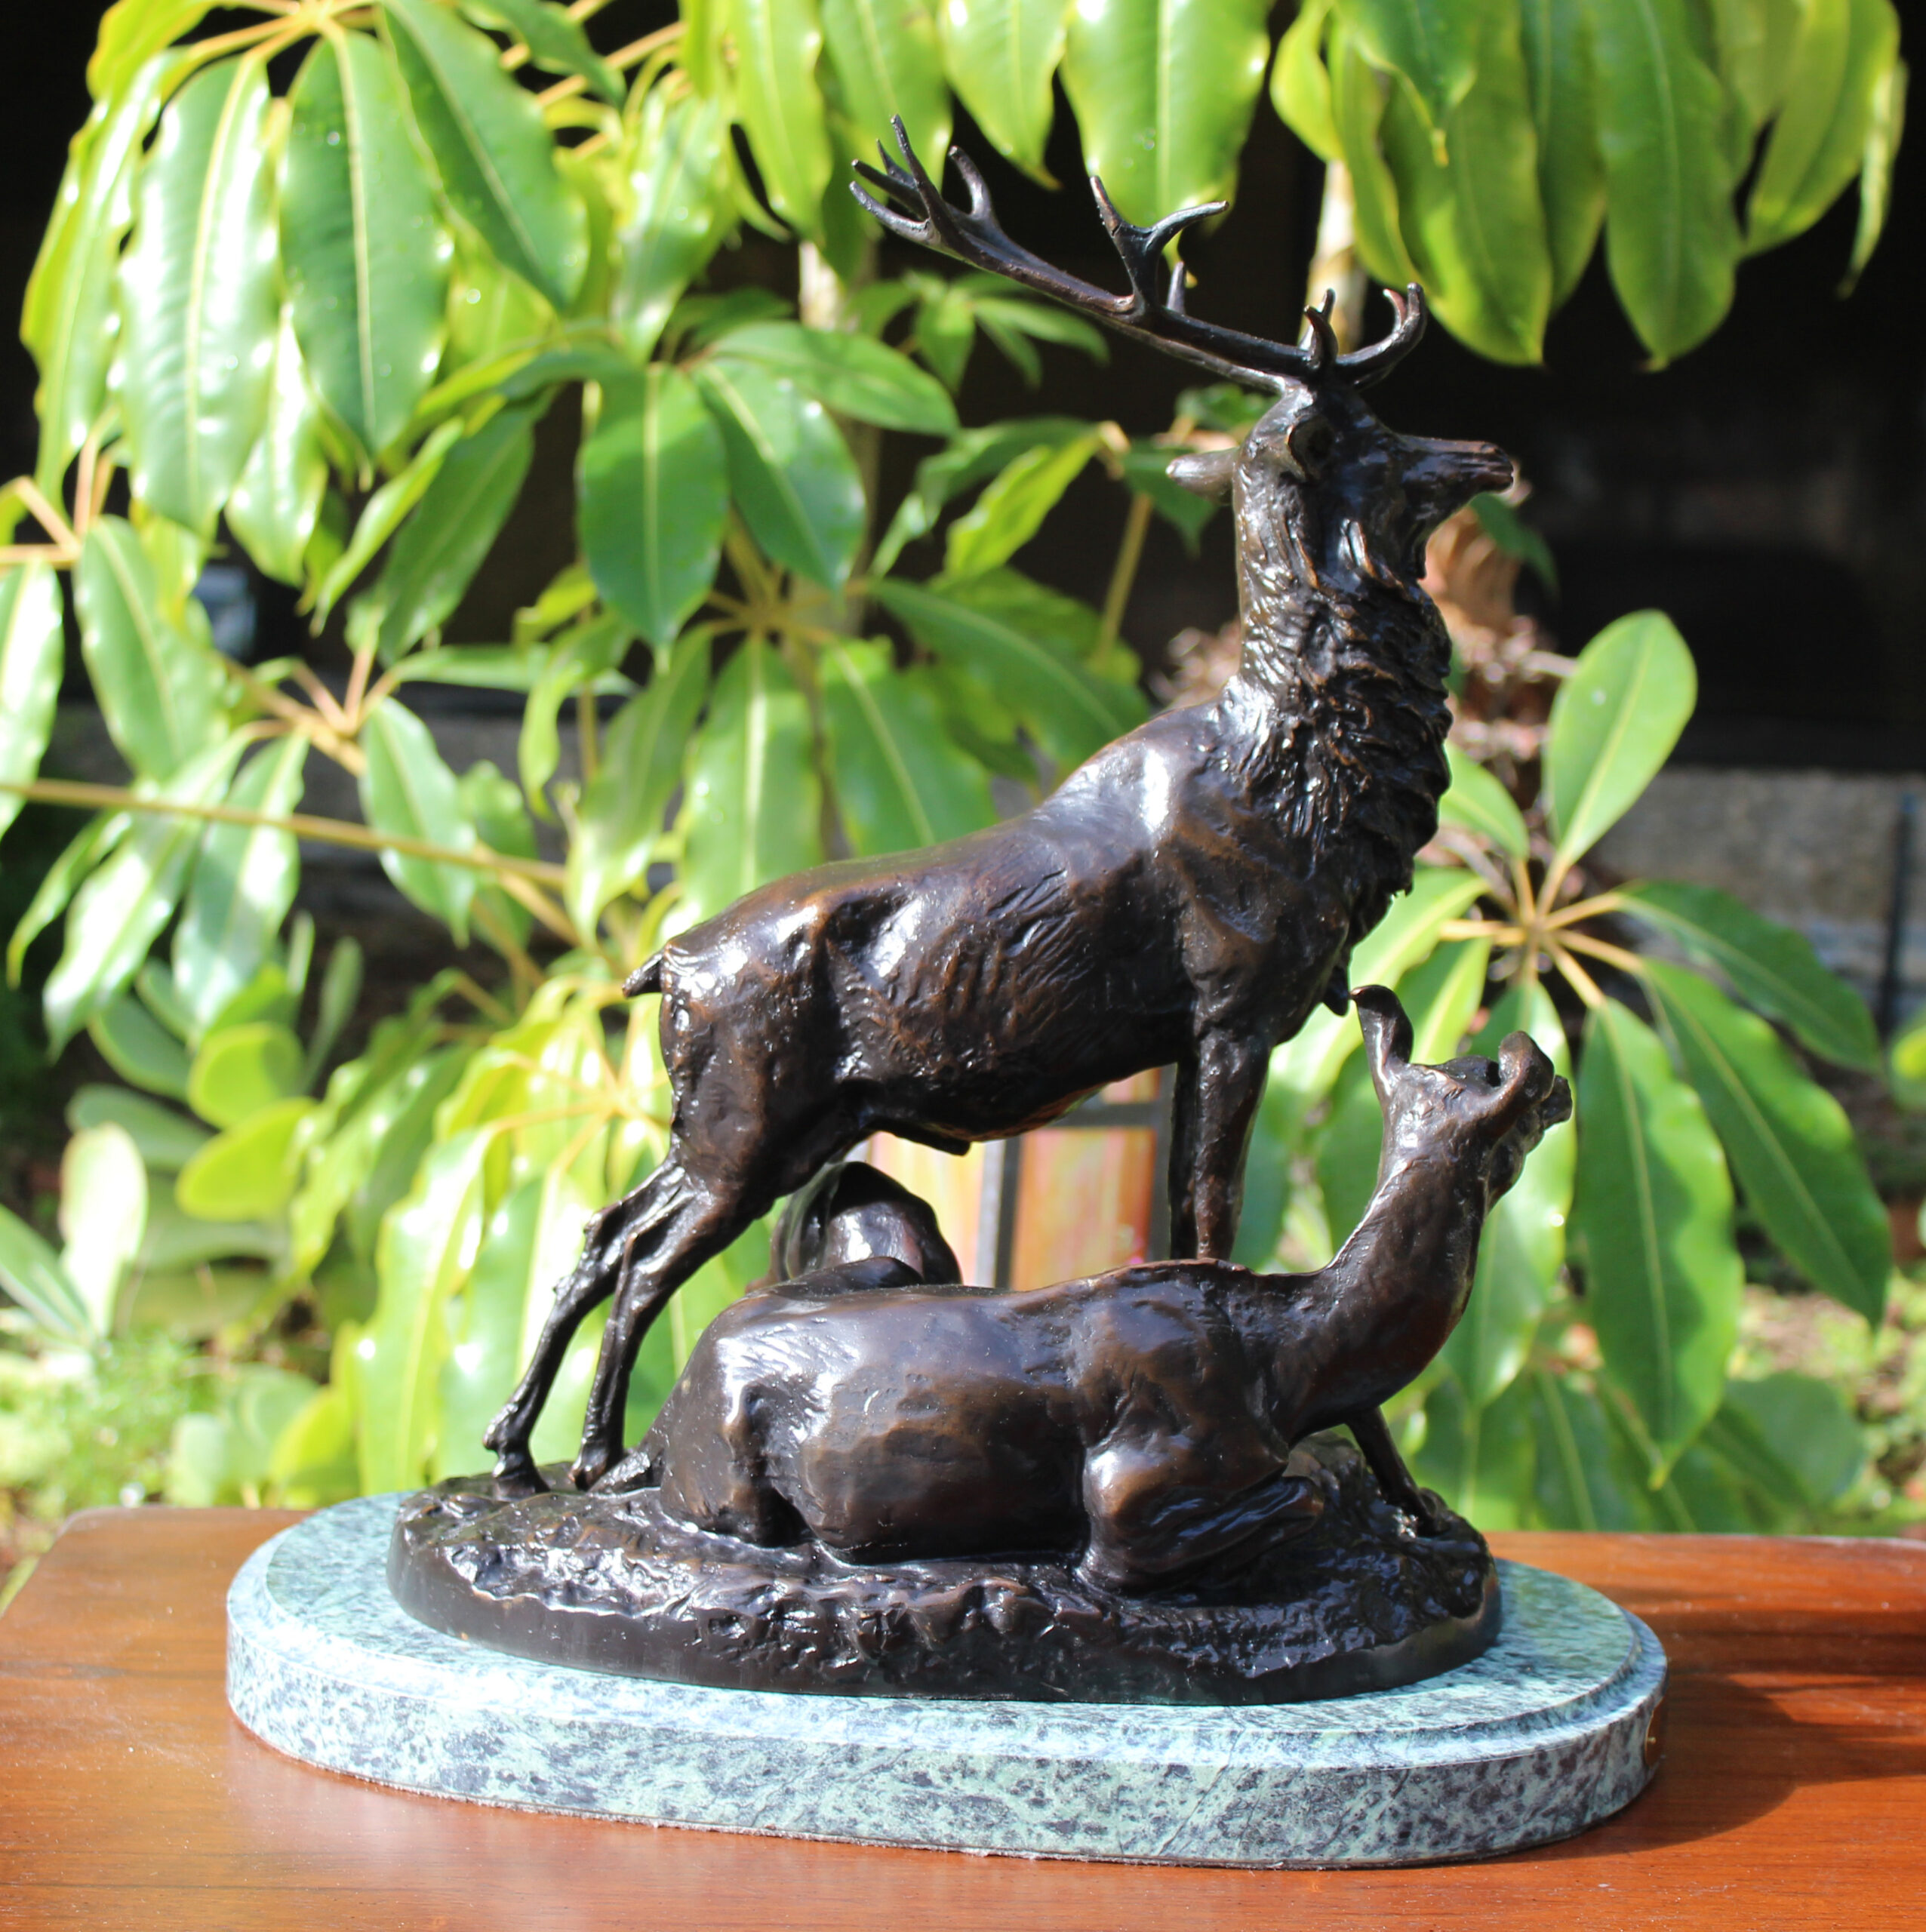 bronze elk family statue